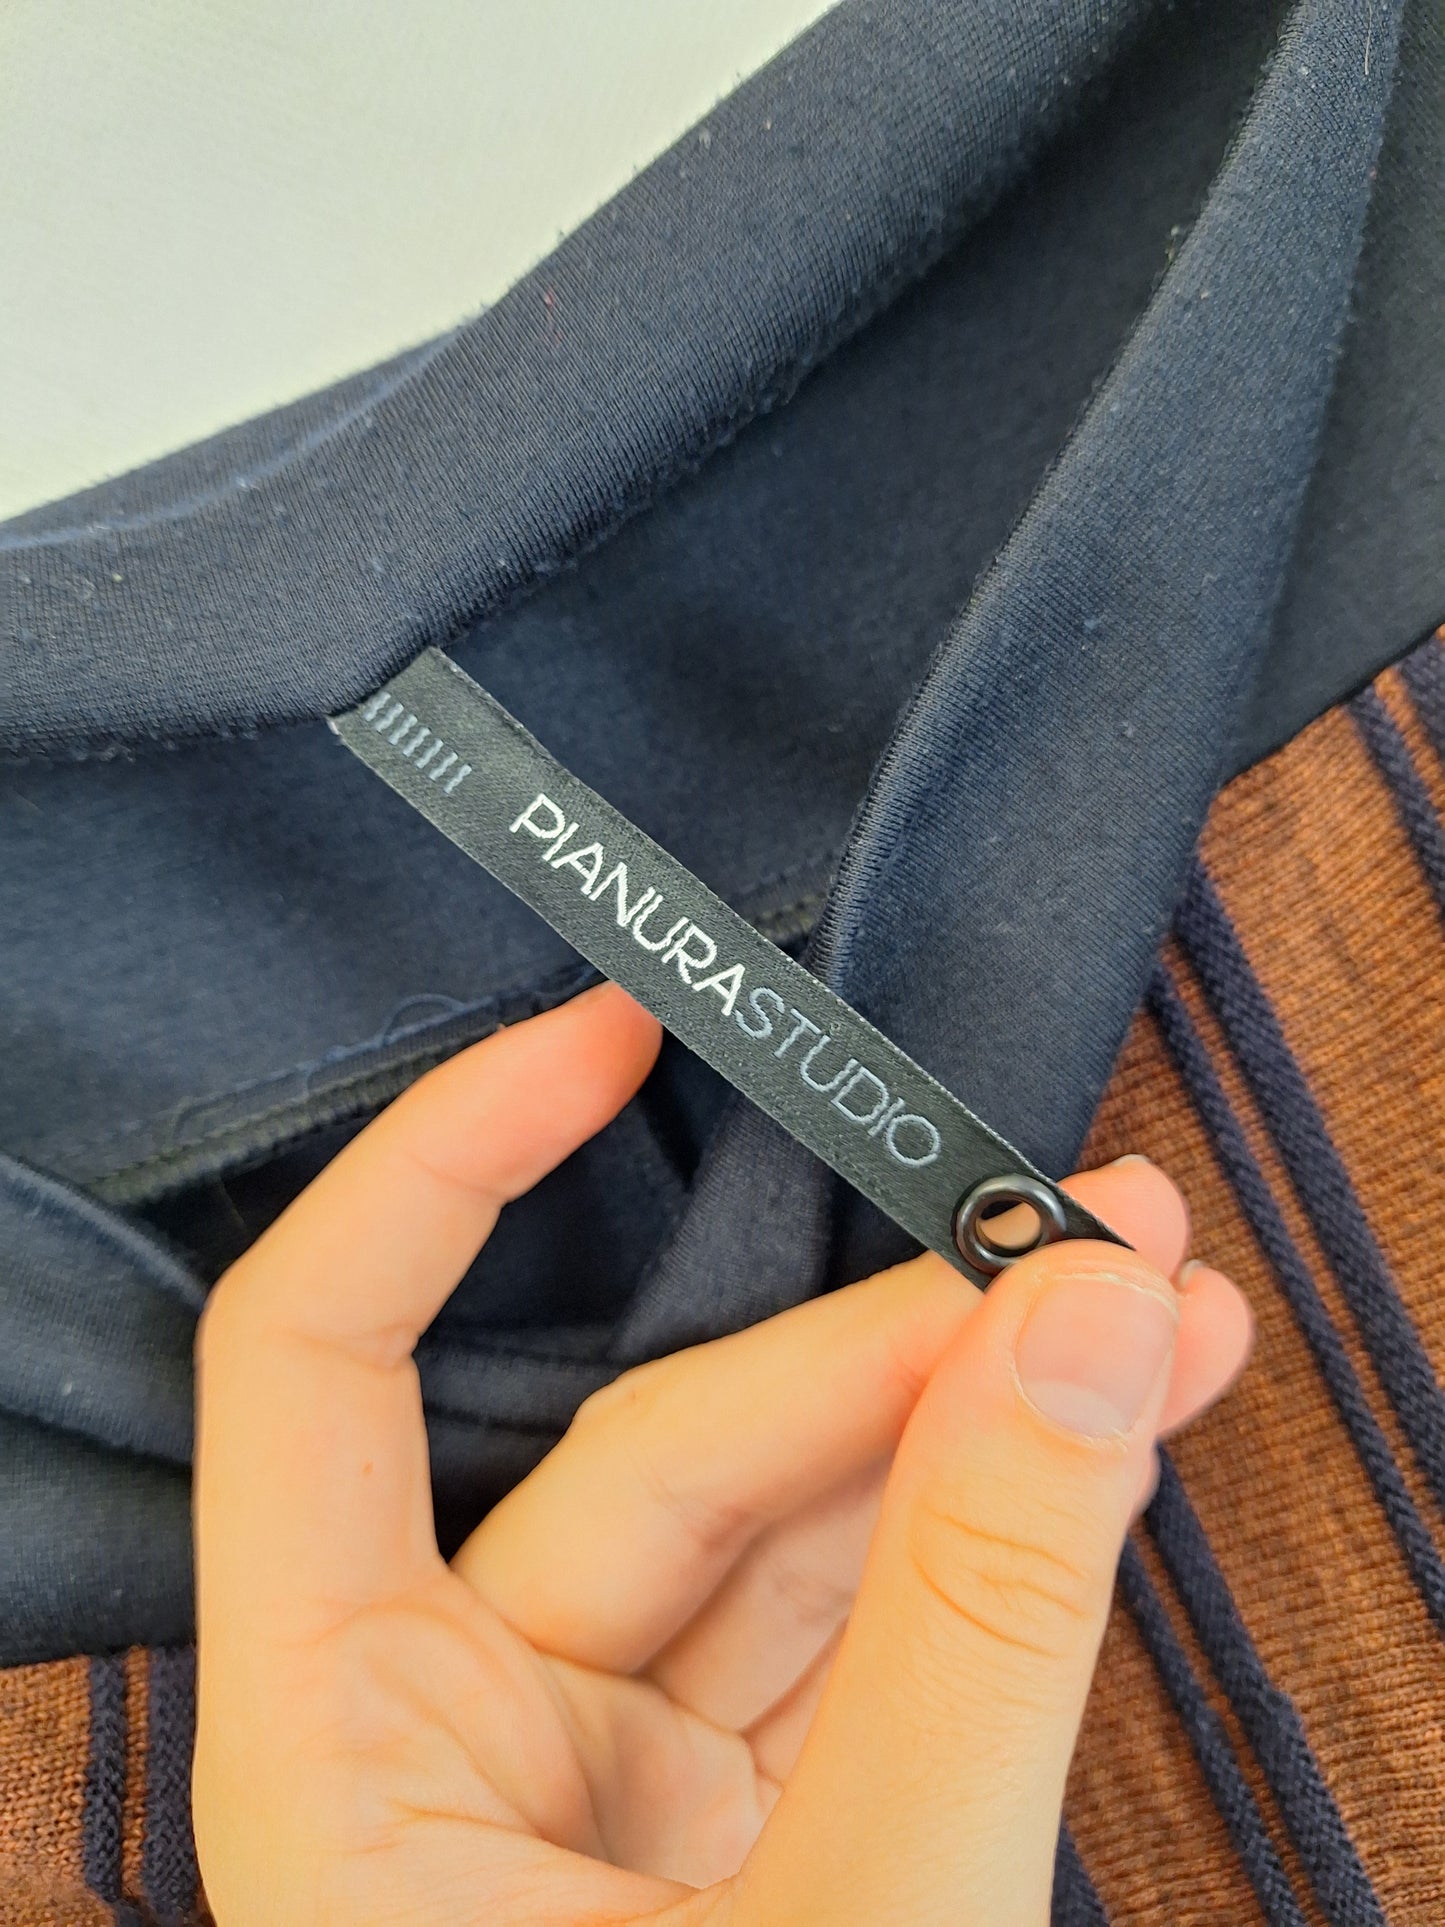 Pianurastudio Flared Textured Wool Blend Midi Skirt Size 16 by SwapUp-Online Second Hand Store-Online Thrift Store